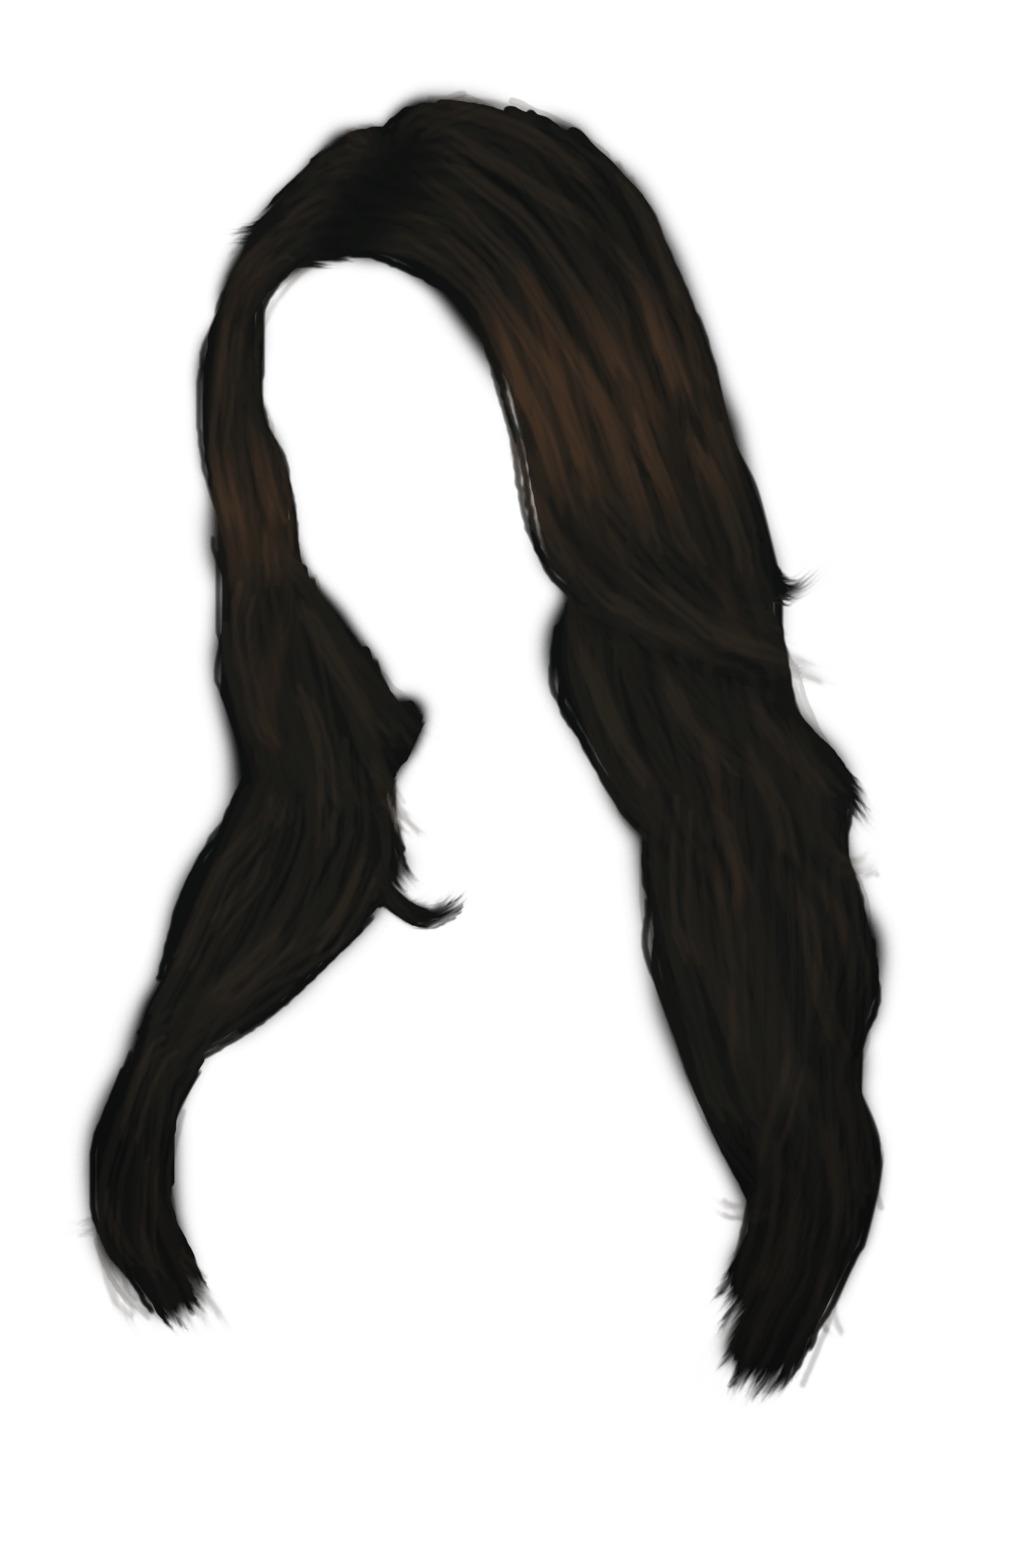 Long Black Women Hair png transparent